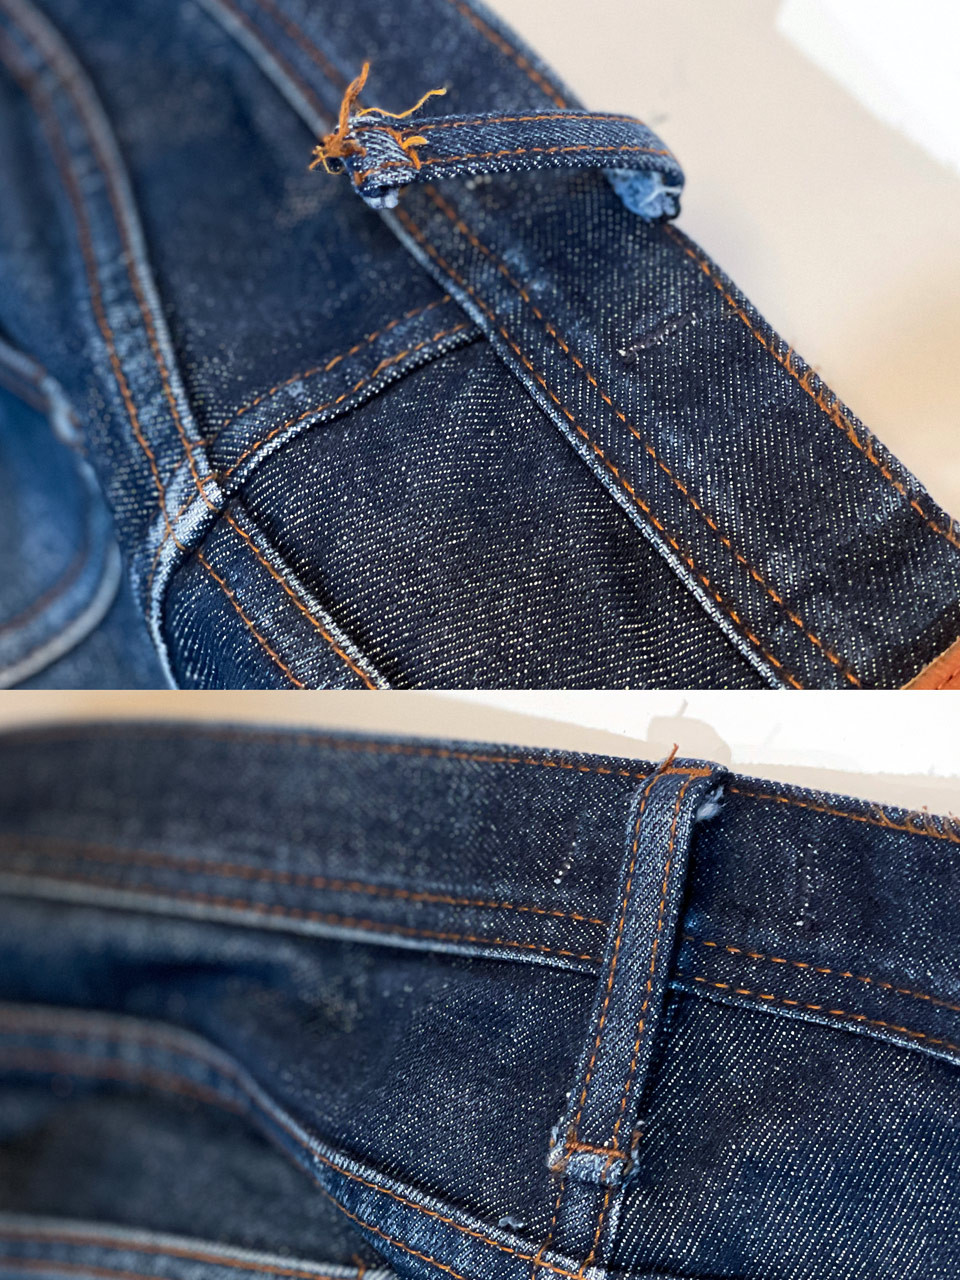 Fix Belt Loops On Jeans & Pants Service | Williamsburg Garment Co.